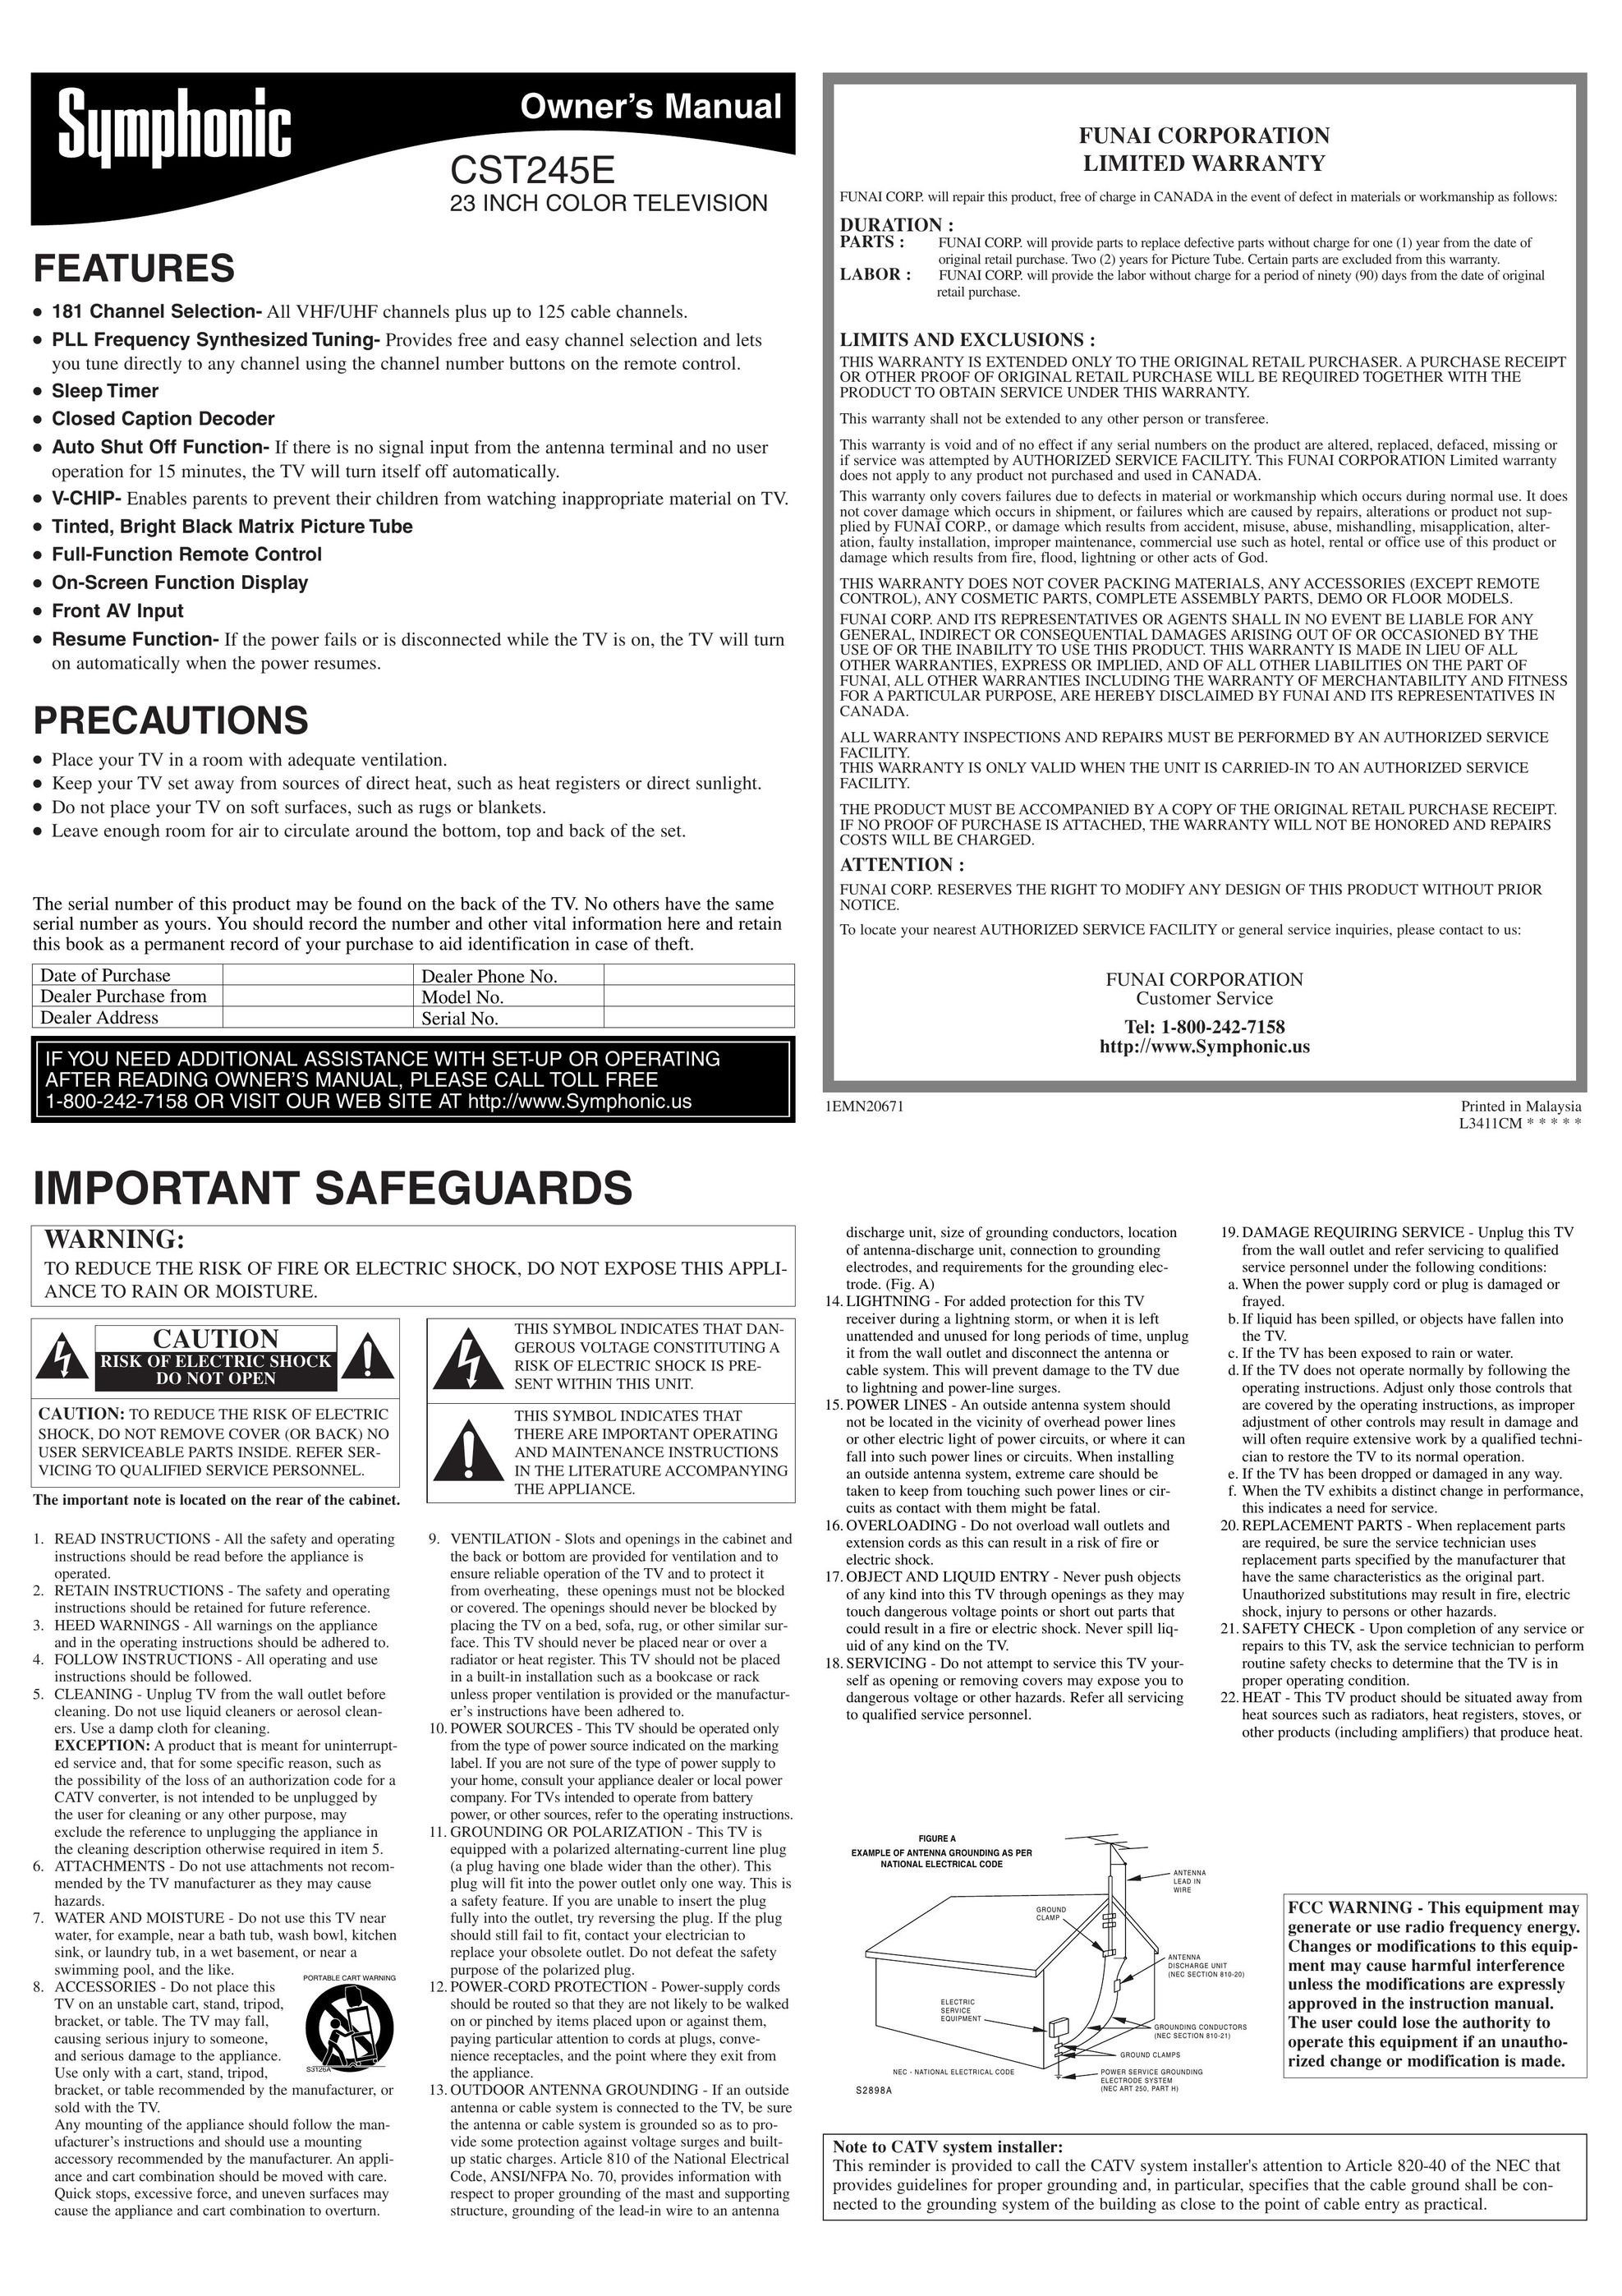 Symphonic CST245E CRT Television User Manual